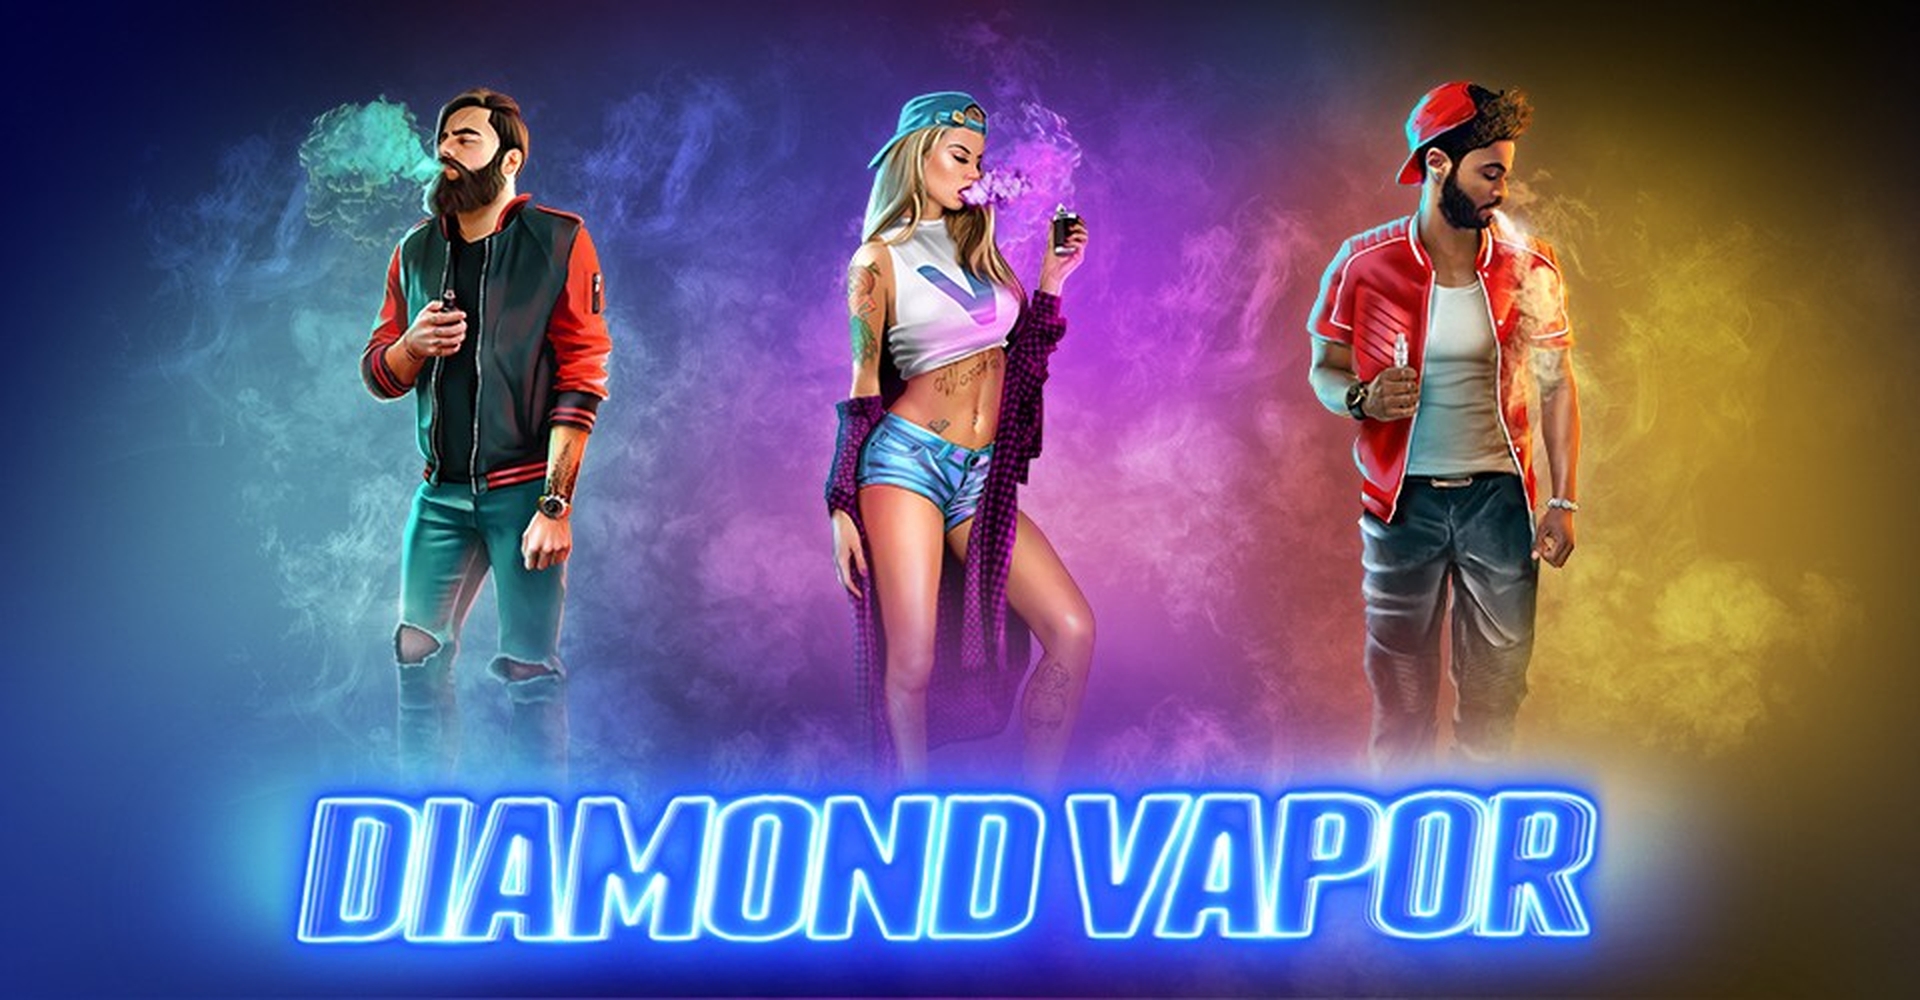 The Diamond Vapor demo